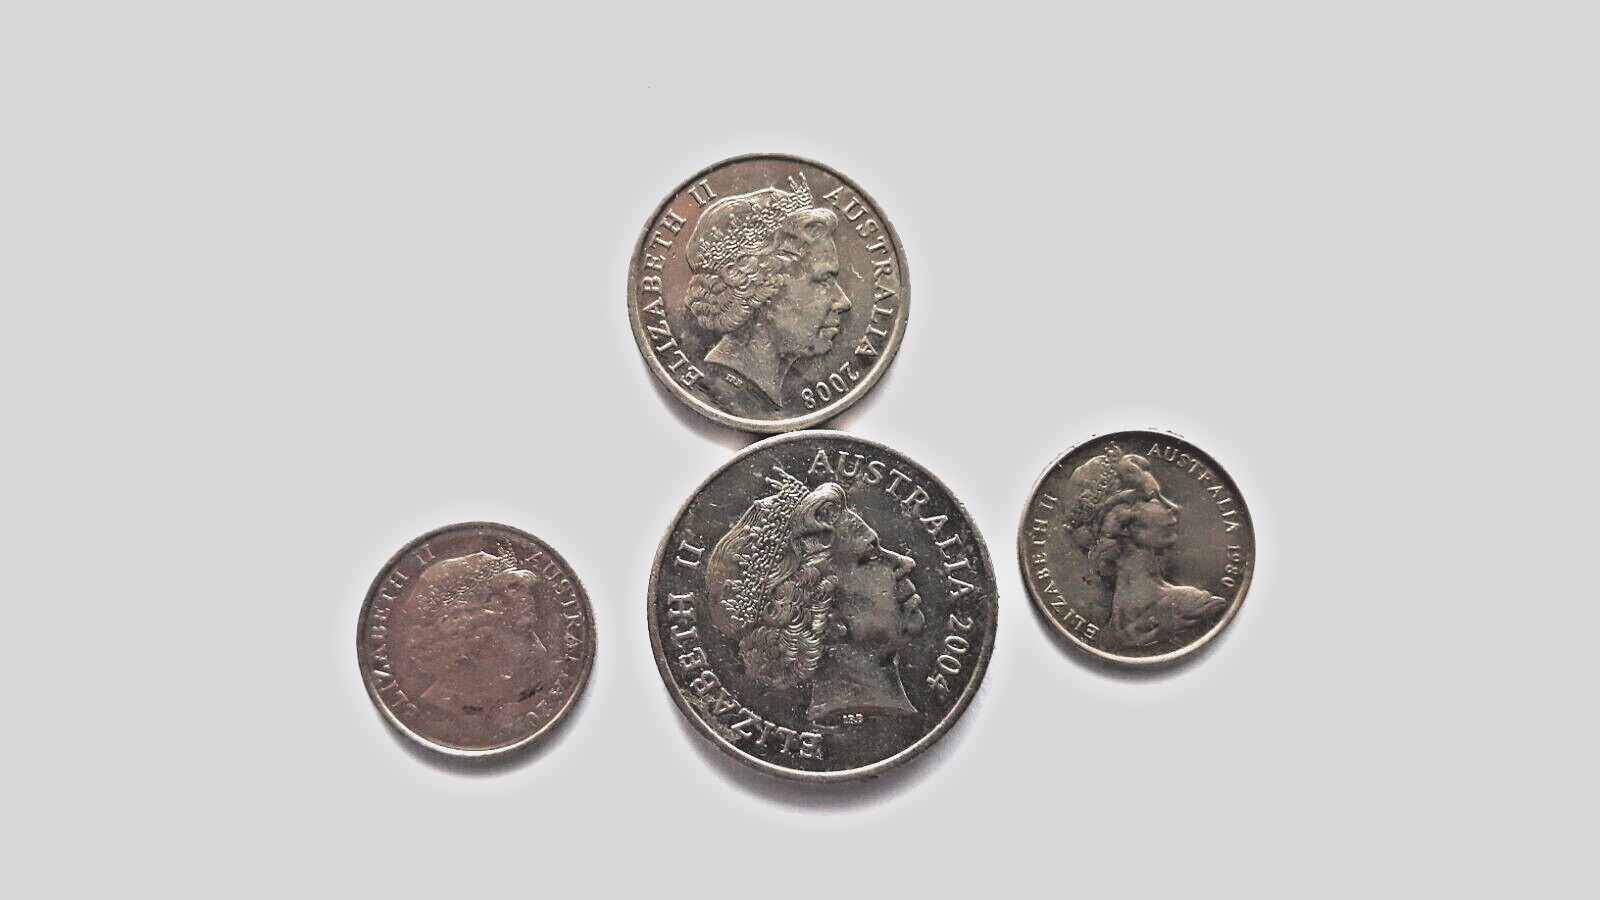 Australia 10,5,1,1 cent coins